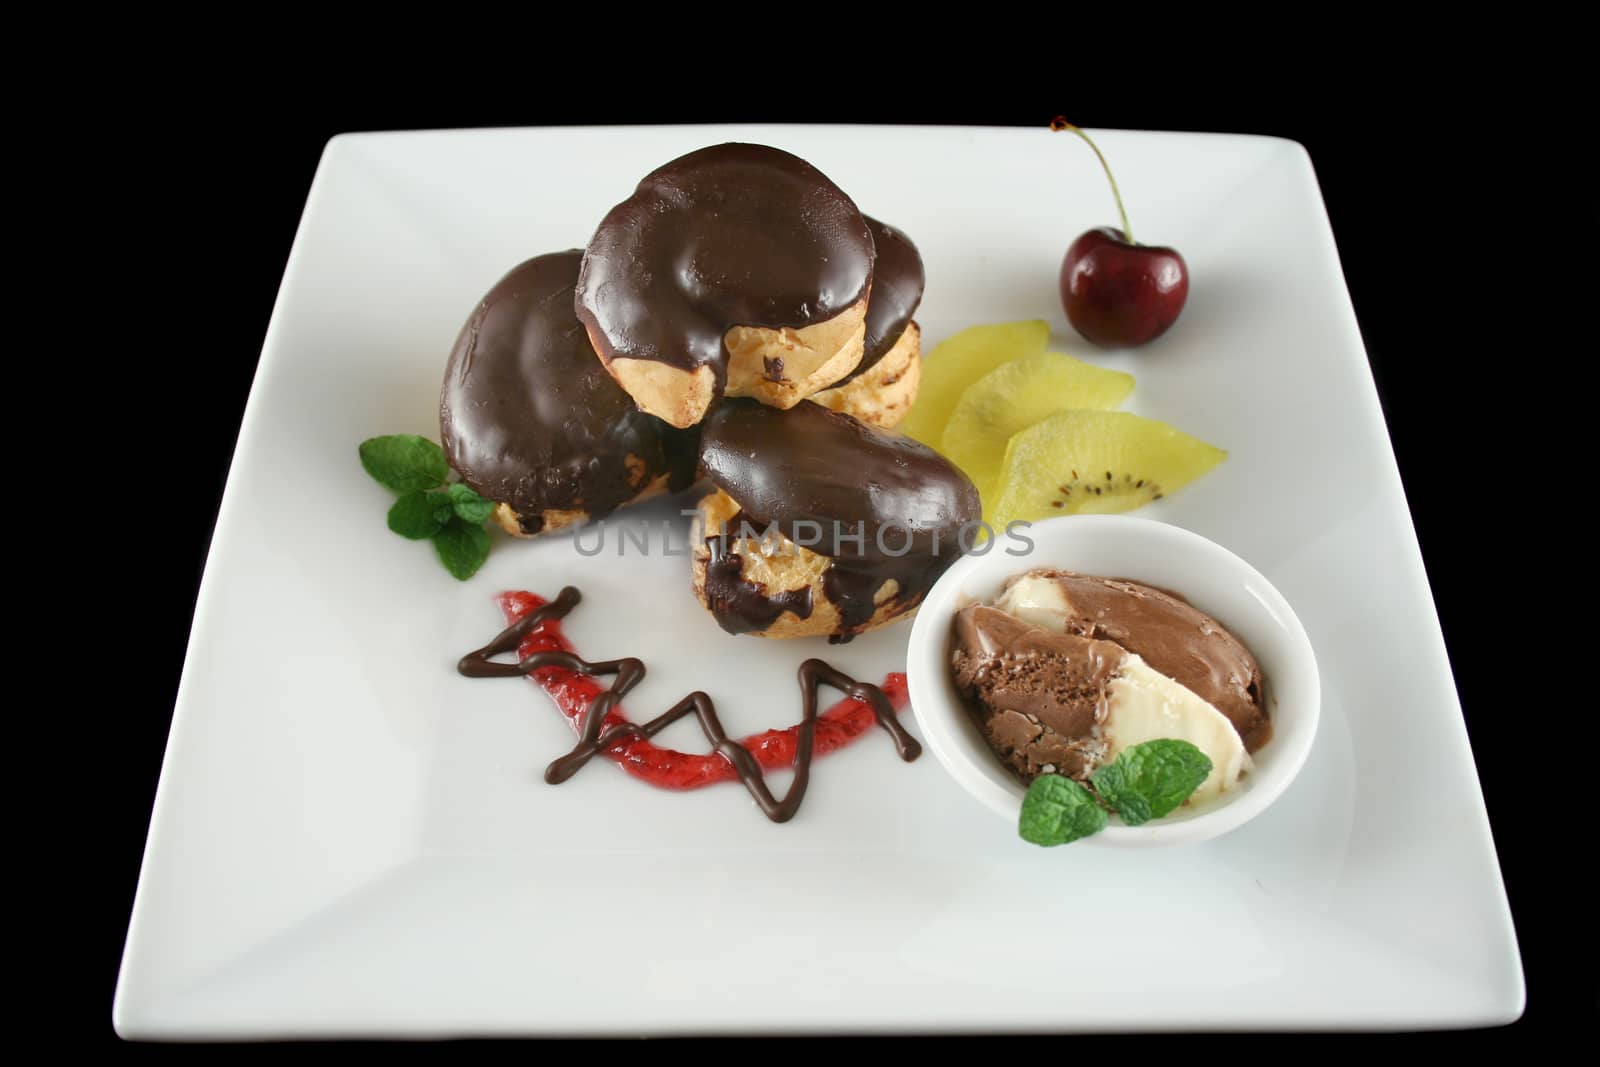 Chocolate profiteroles with kiwi fruit and ice cream.